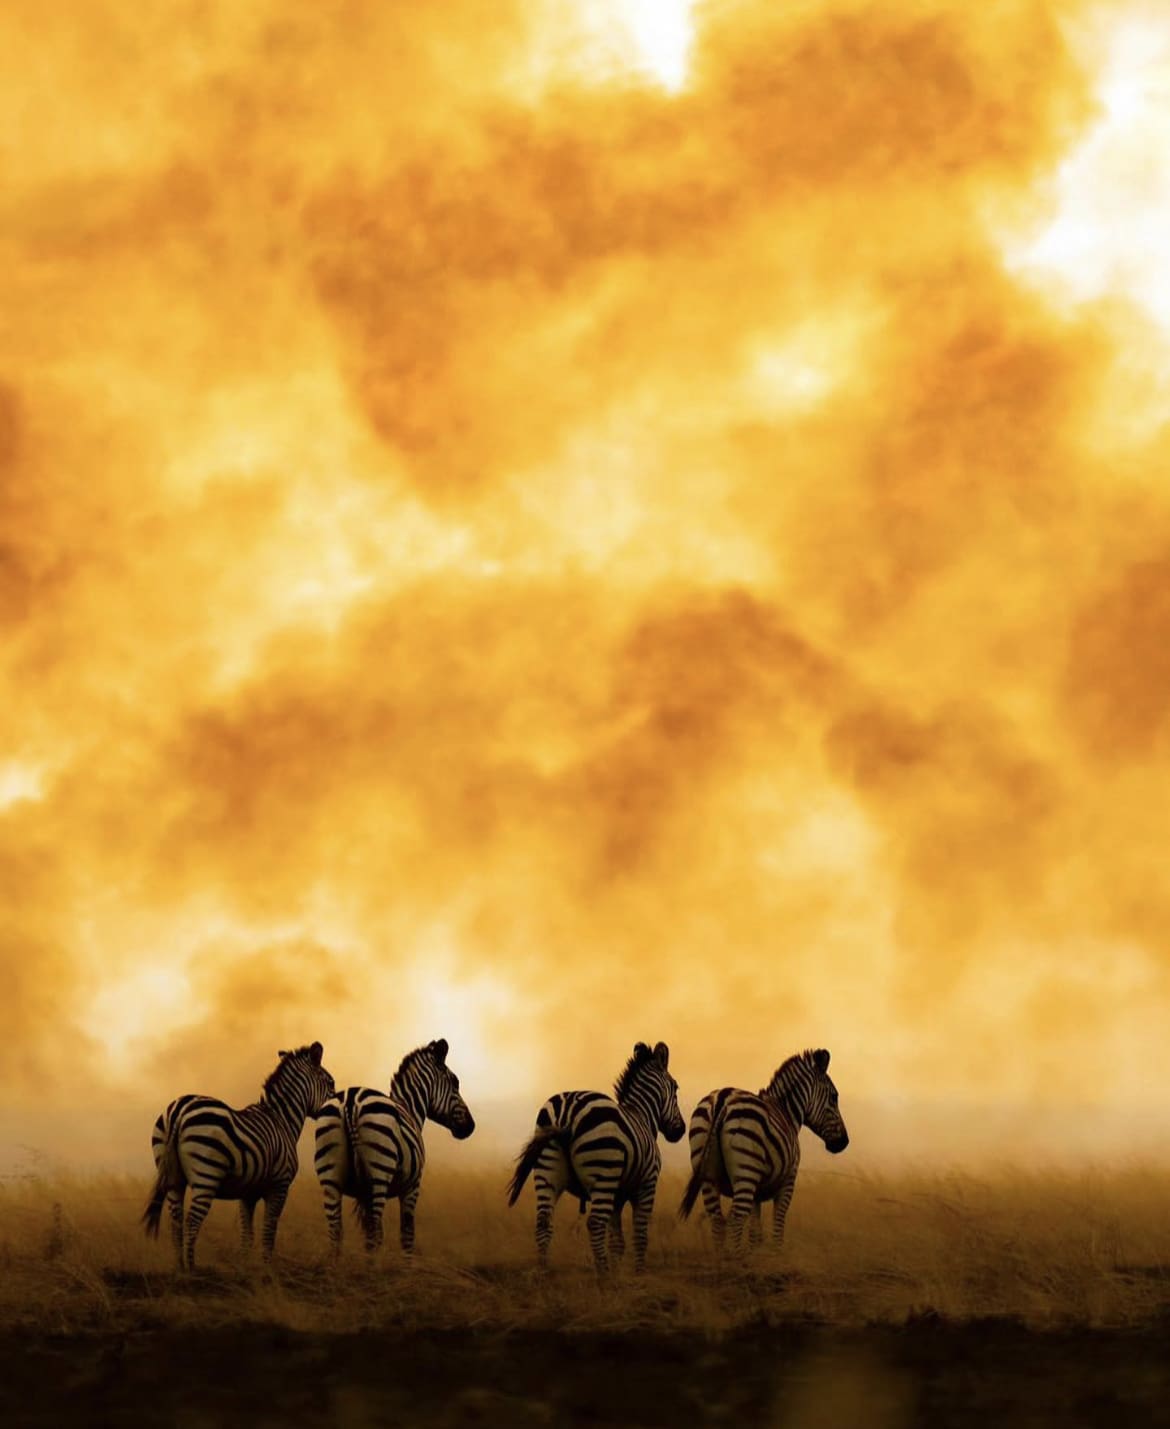 Zebras facing into a wild fire in Kenya